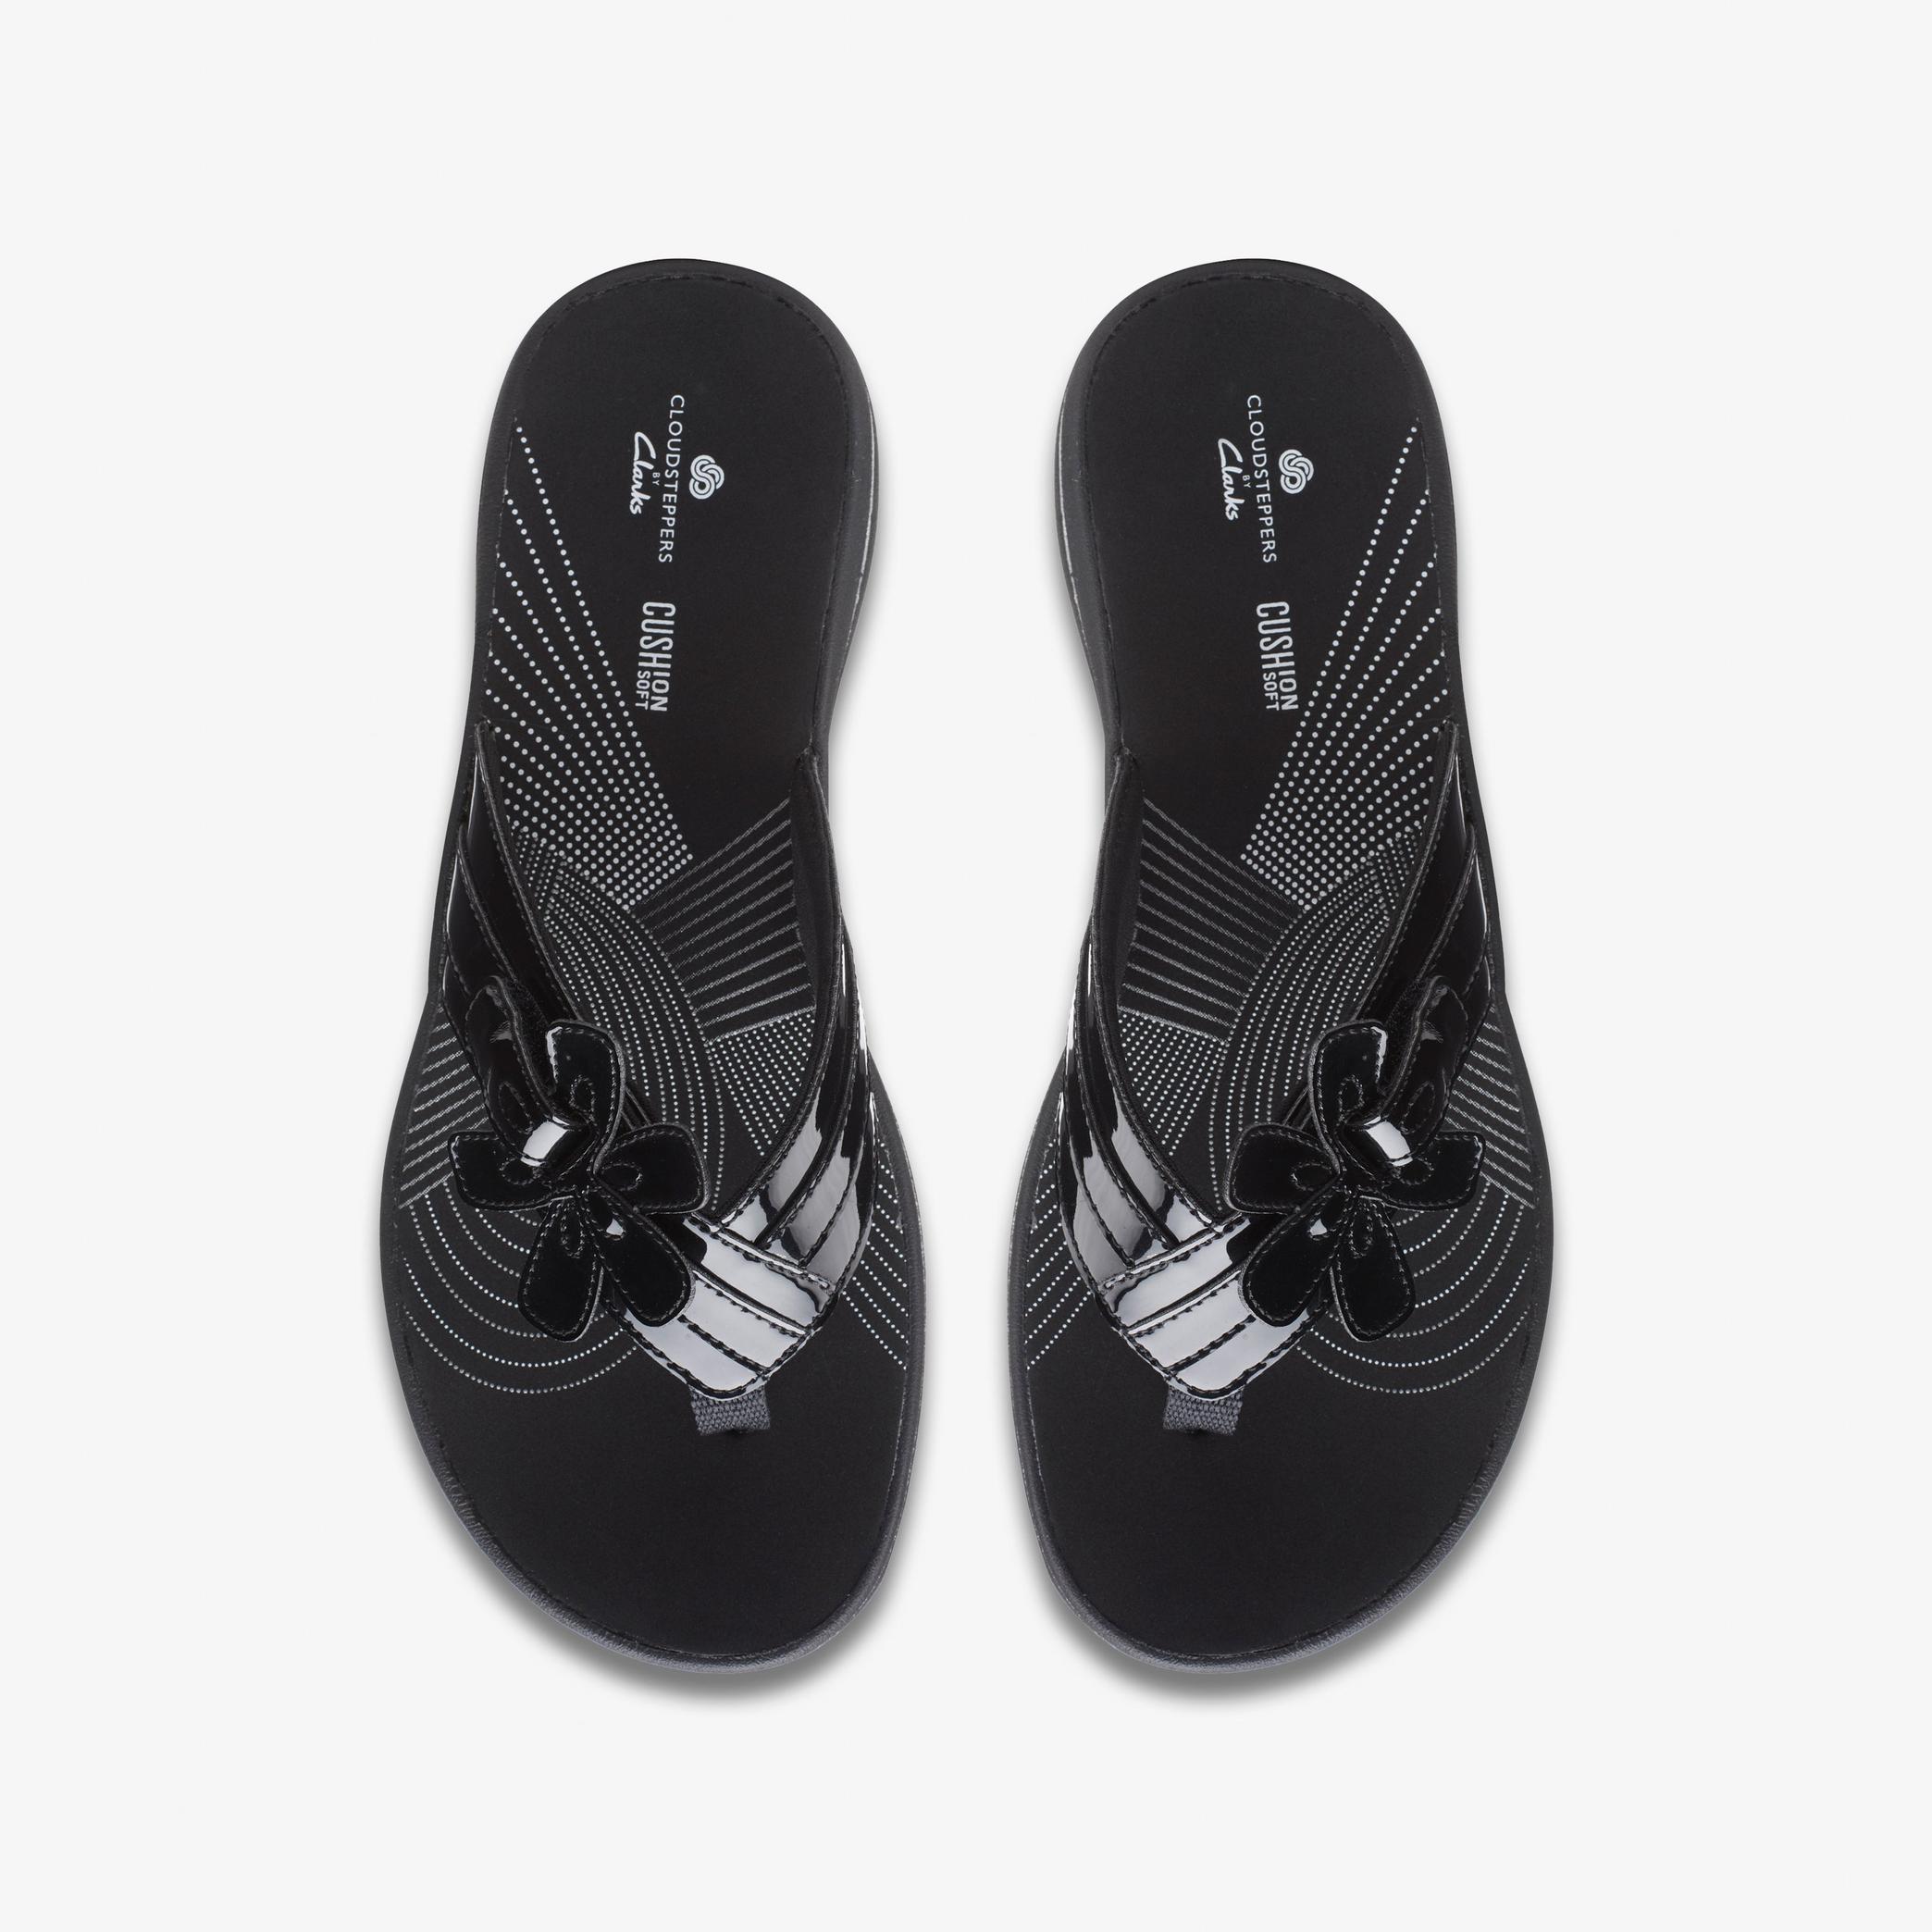 WOMENS Brinkley Flora Black Patent Flat Sandals | Clarks US